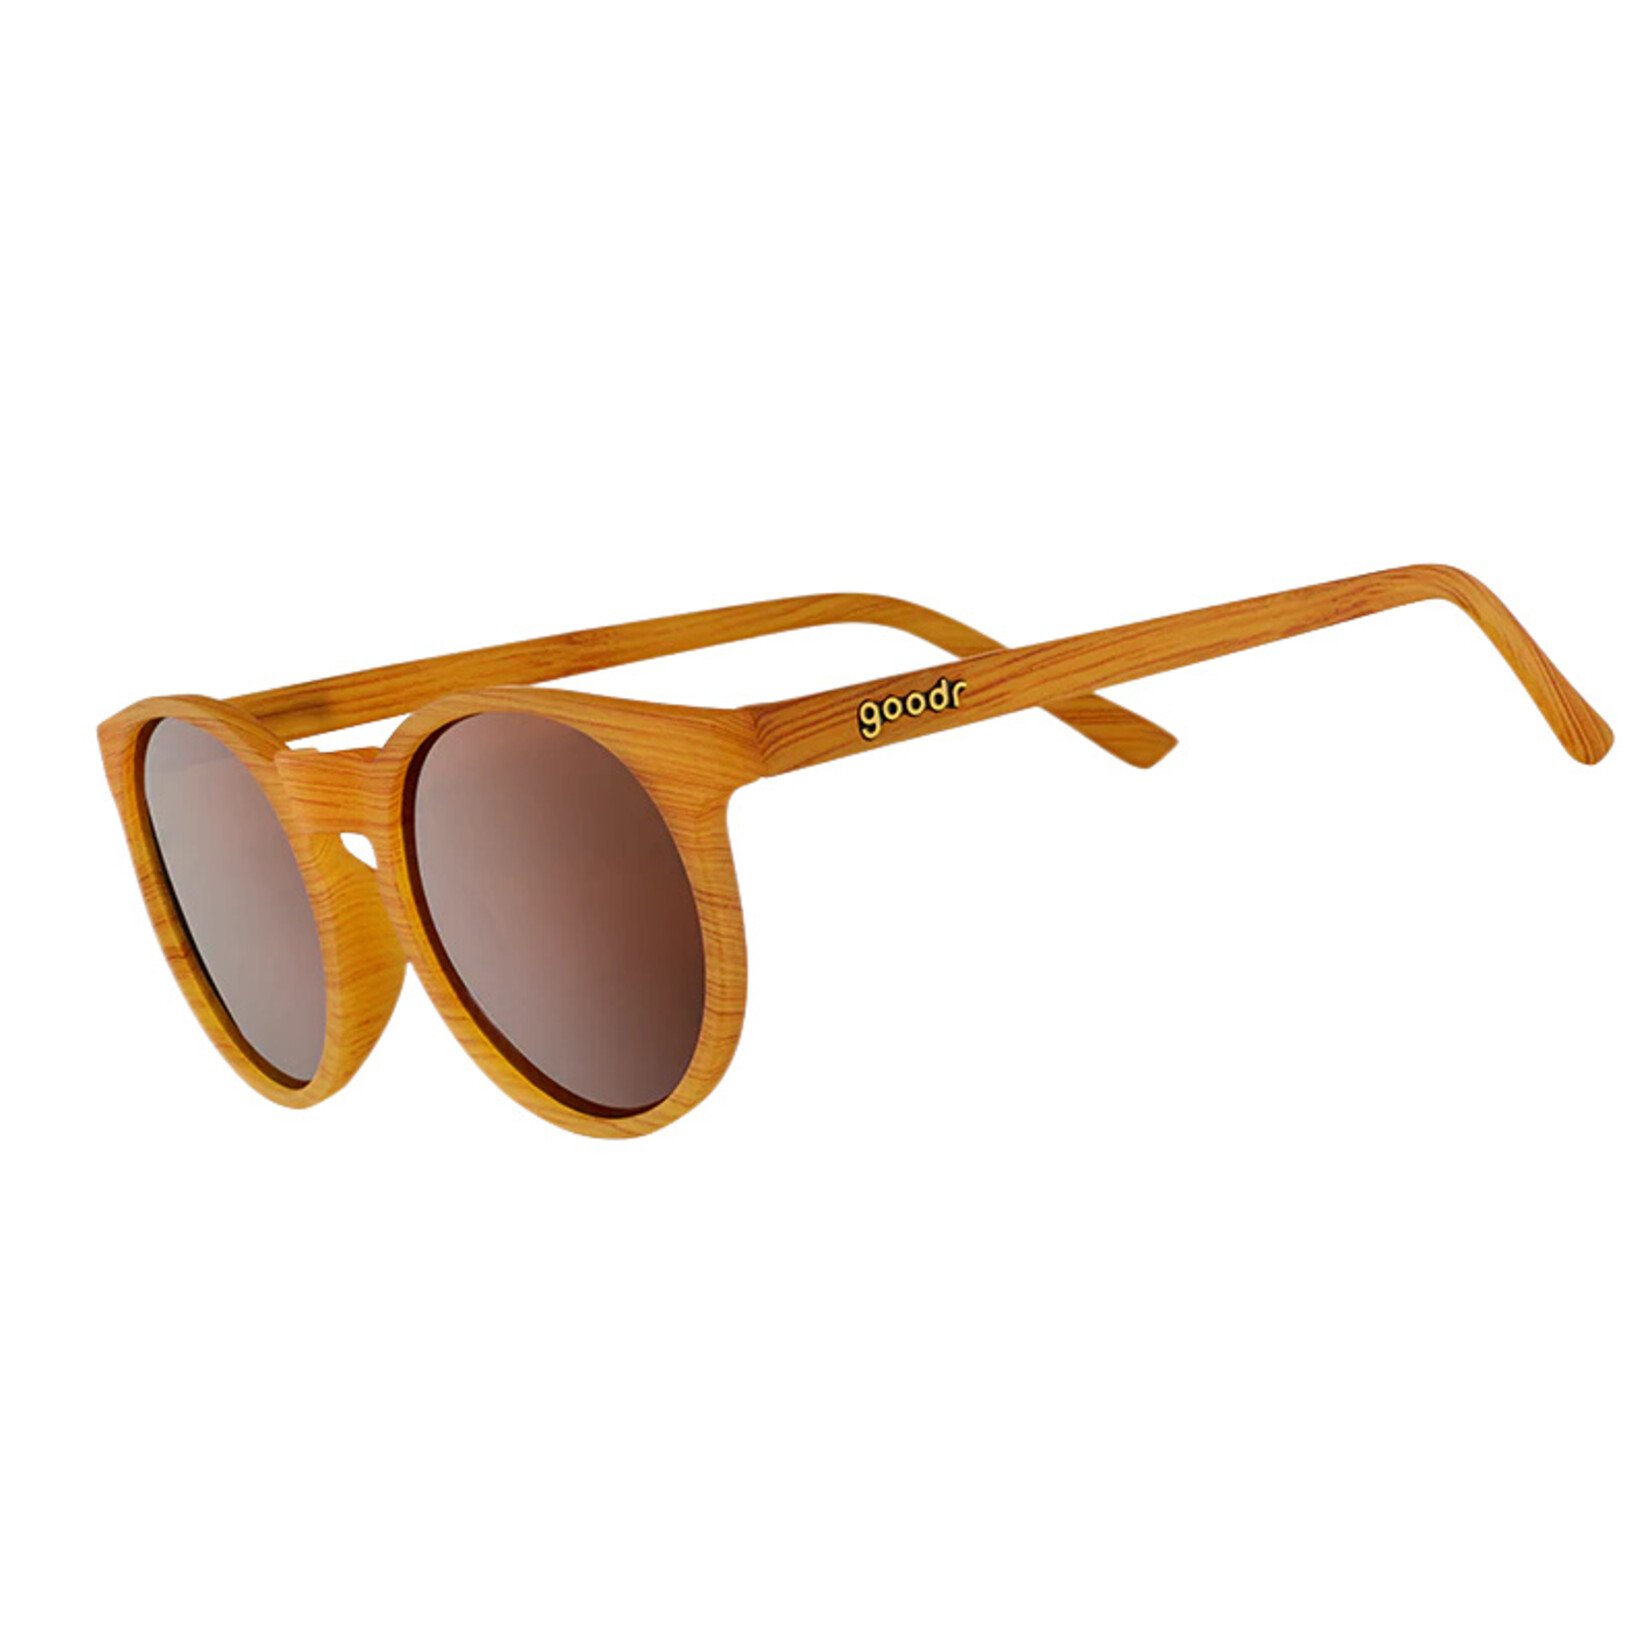 Goodr Goodr "Bodhi's Ultimate Ride" Sunglasses